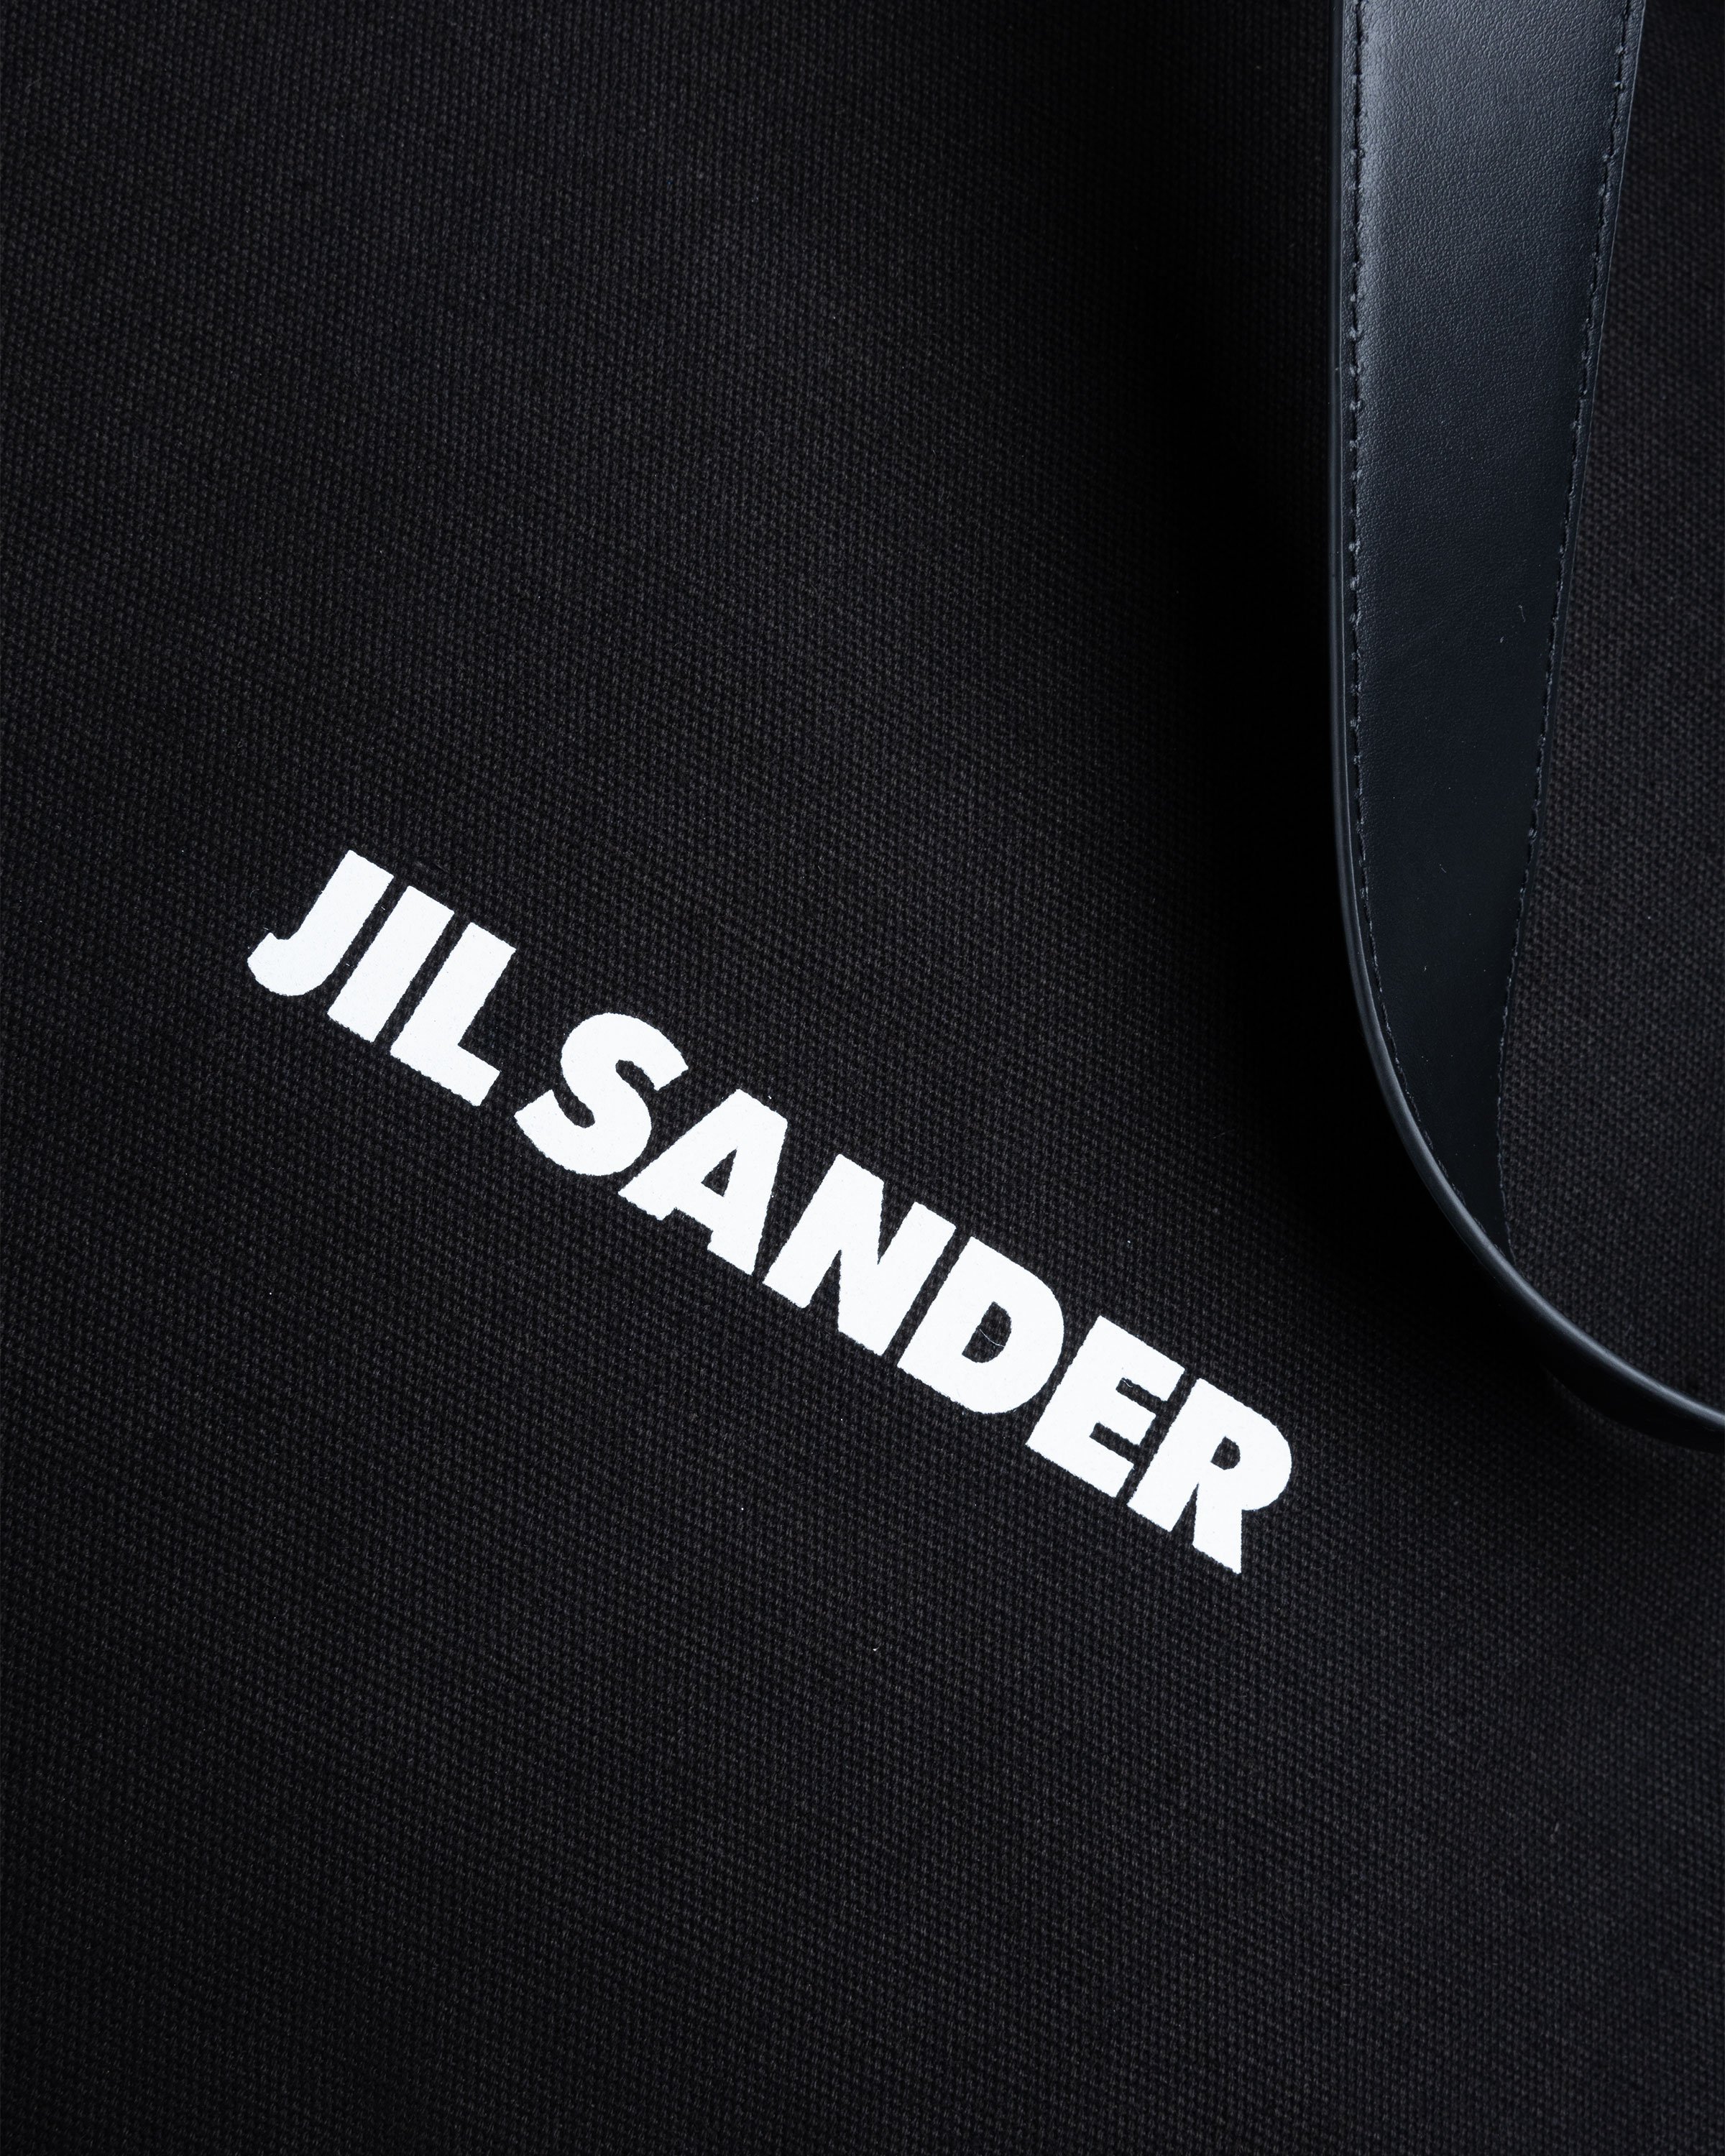 Jil Sander - Book Tote Grande Black - Accessories - Black - Image 3